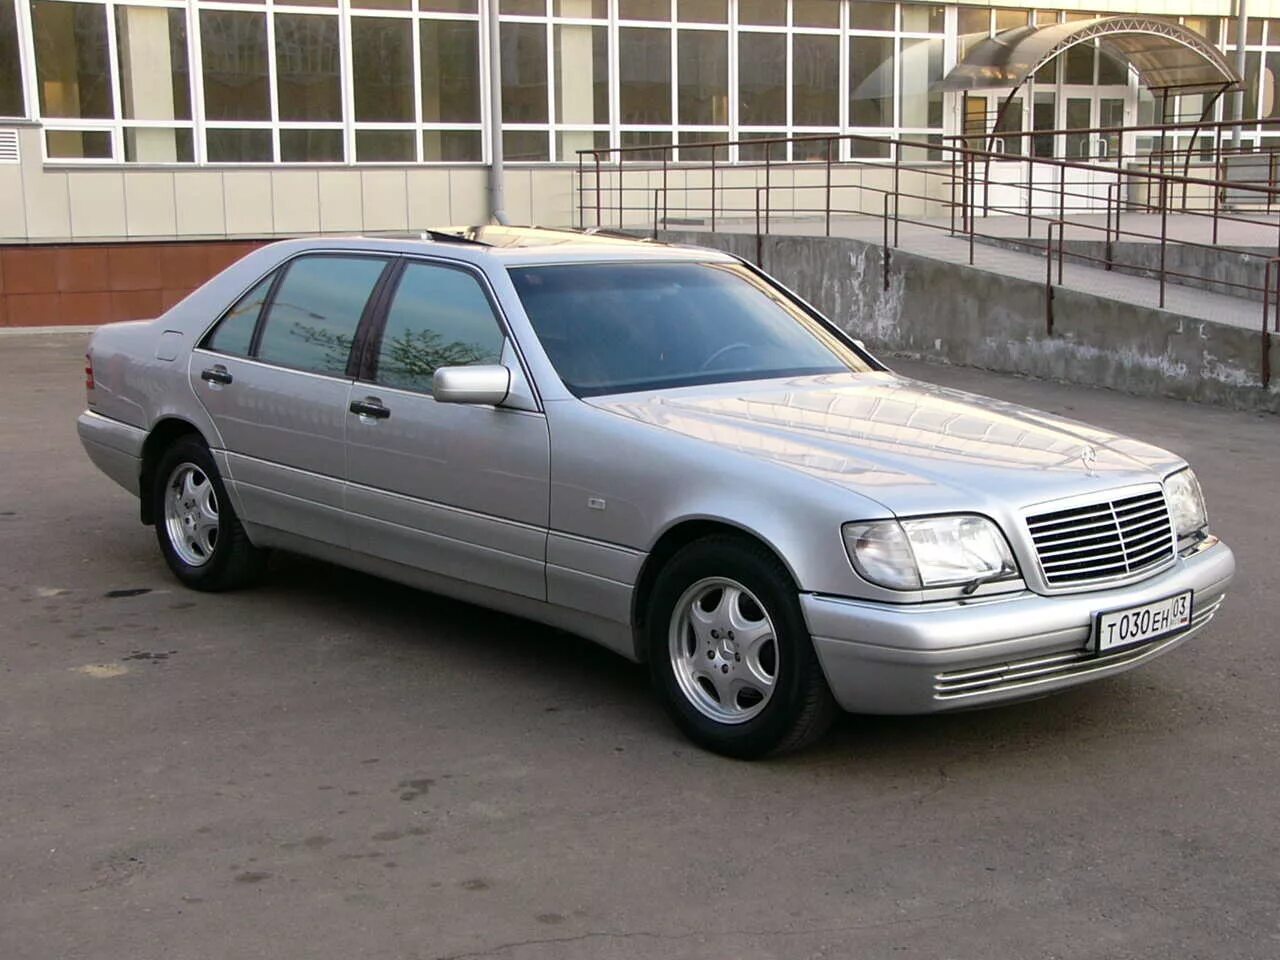 Mercedes-Benz s-class 1996. Мерседес s 1996. Mercedes s class 1996. Мерседес 1996 s class.